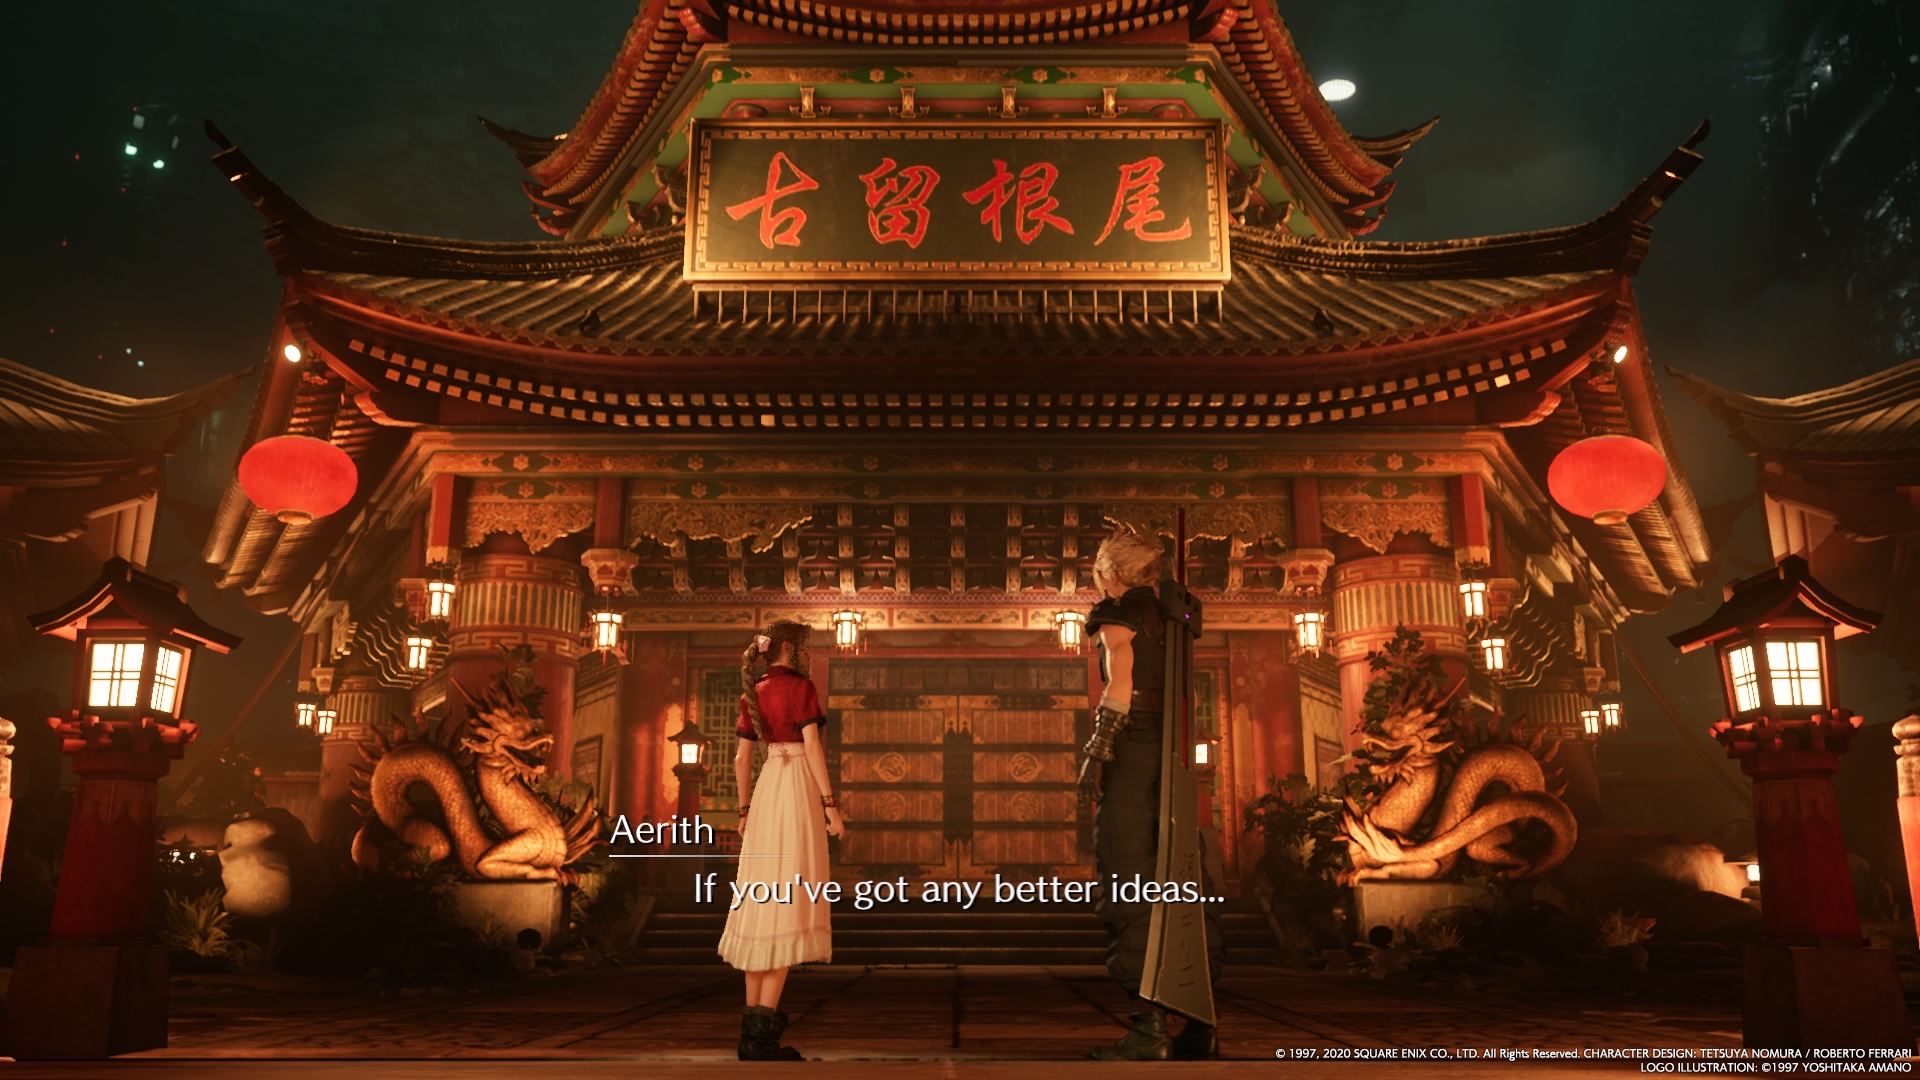 Goondu Review: Final Fantasy VII Remake